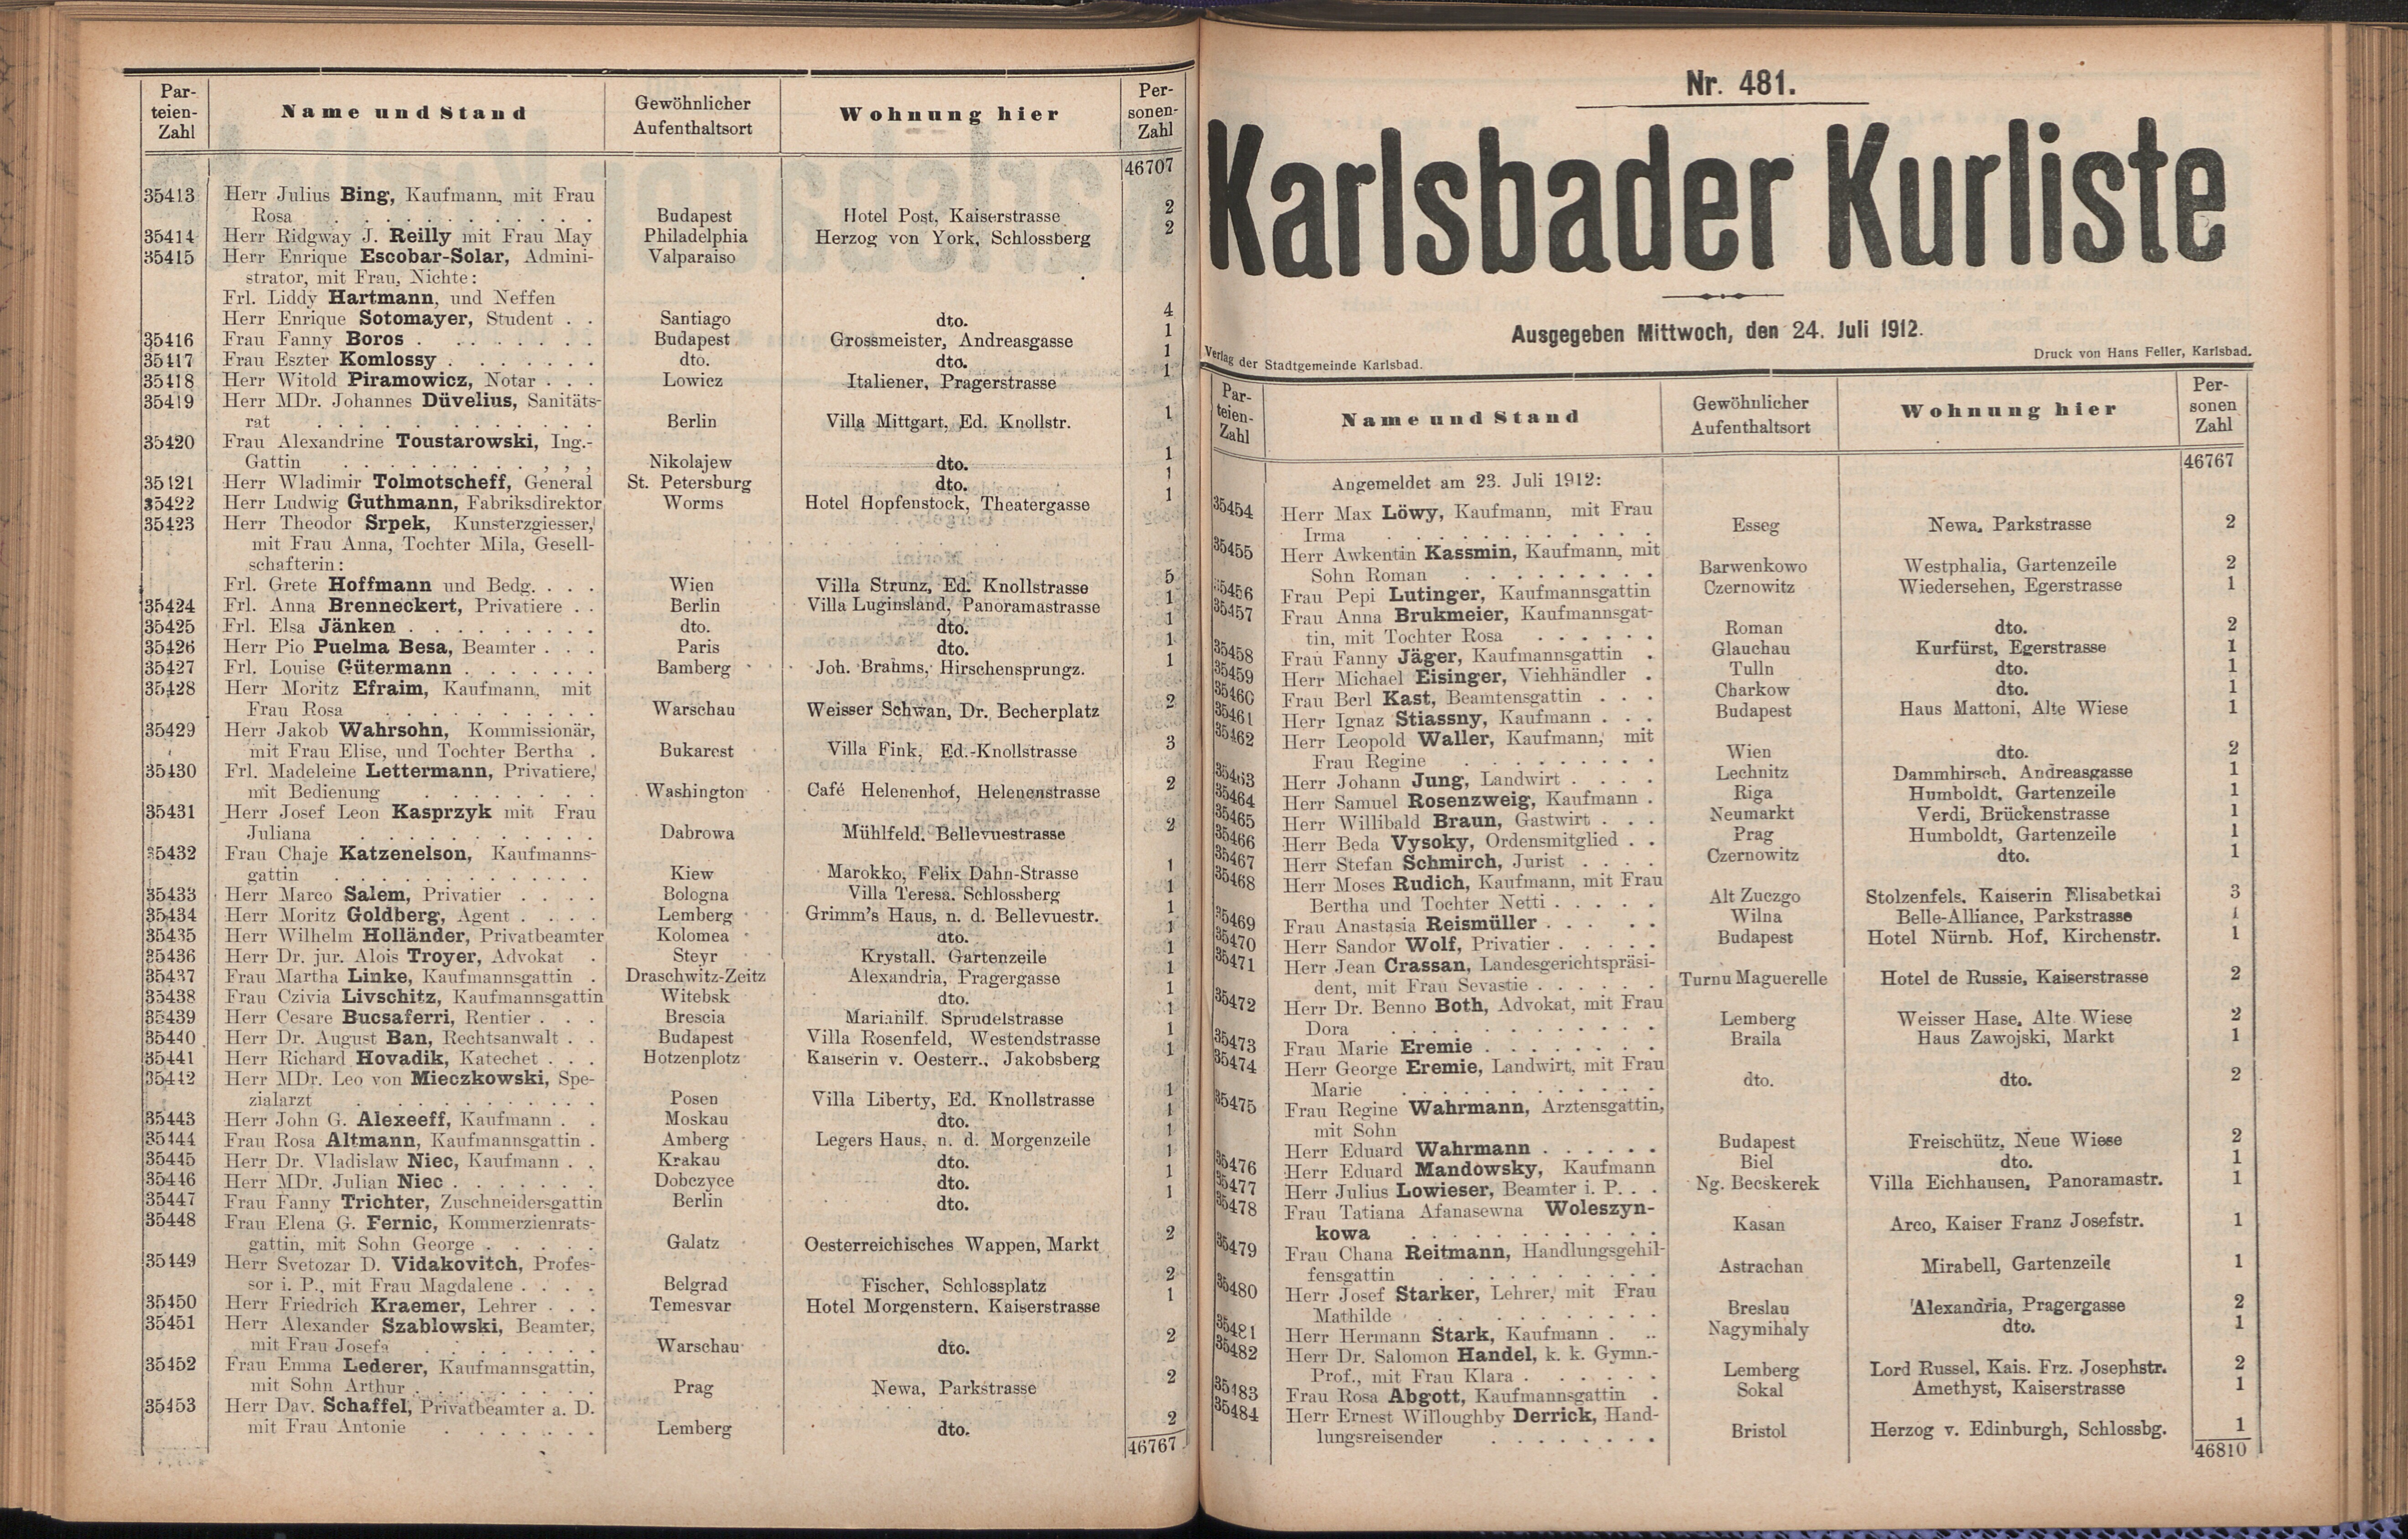 197. soap-kv_knihovna_karlsbader-kurliste-1912-2_1970